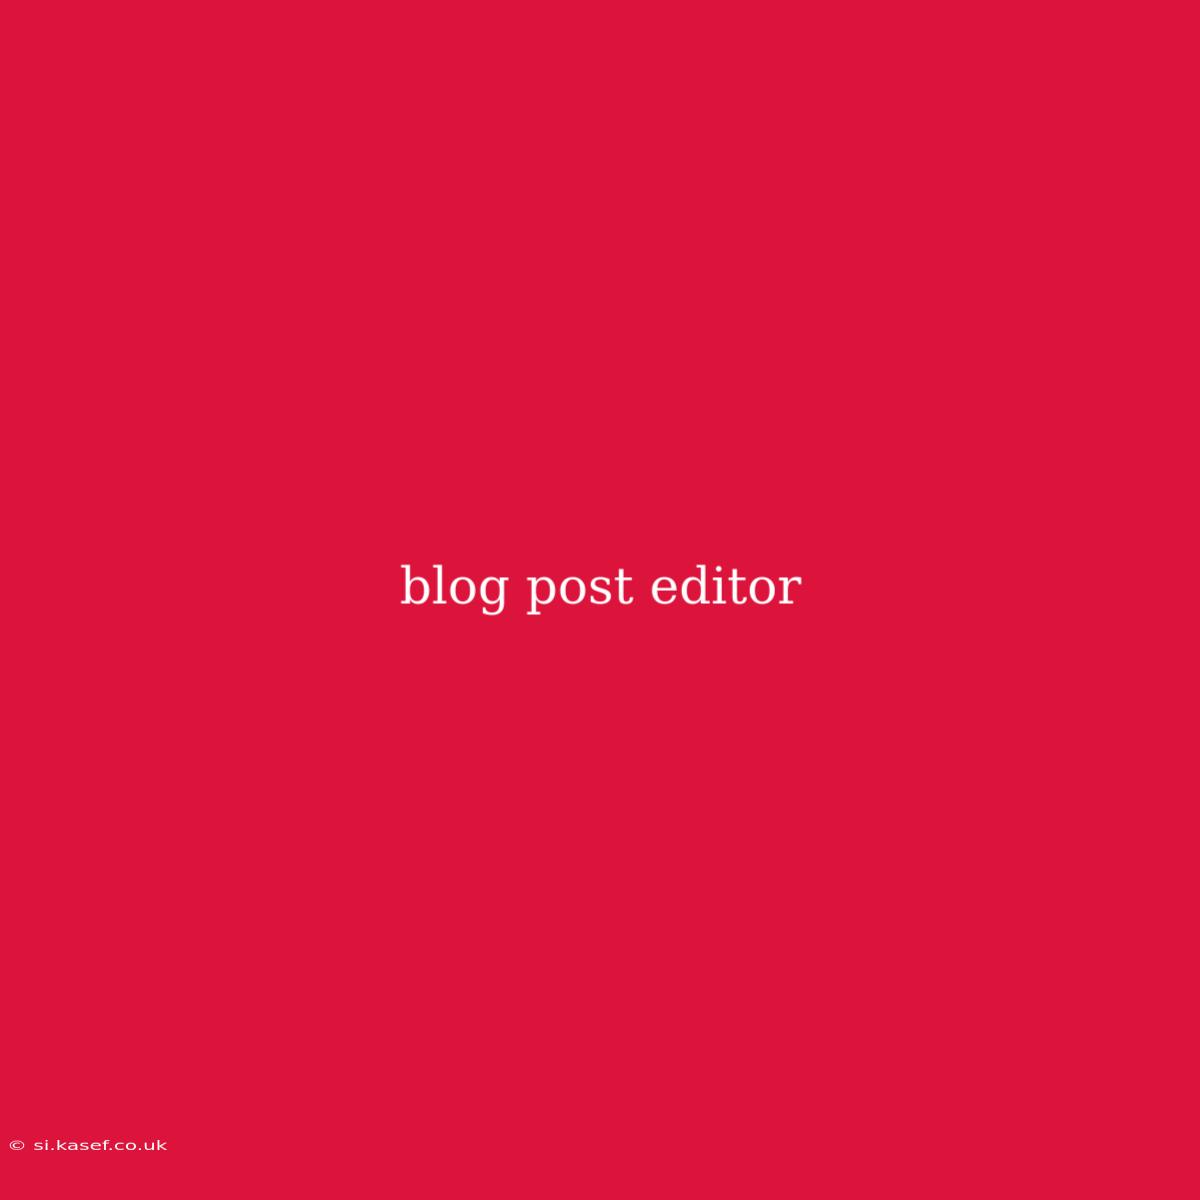 Blog Post Editor